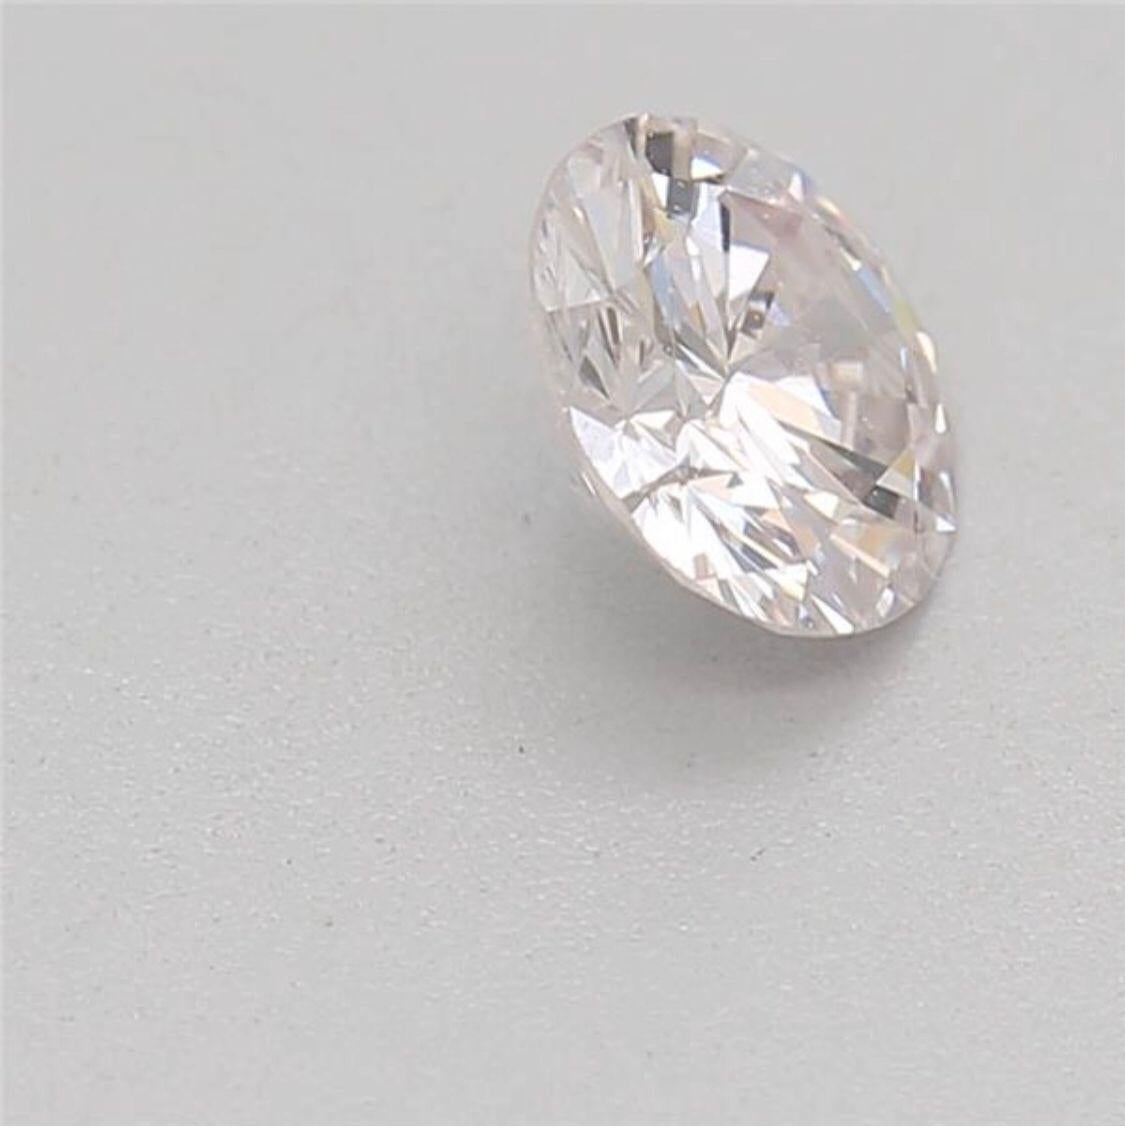 Diamant rose pâle taille ronde de 0,31 carat de pureté SI1 certifié CGL en vente 2